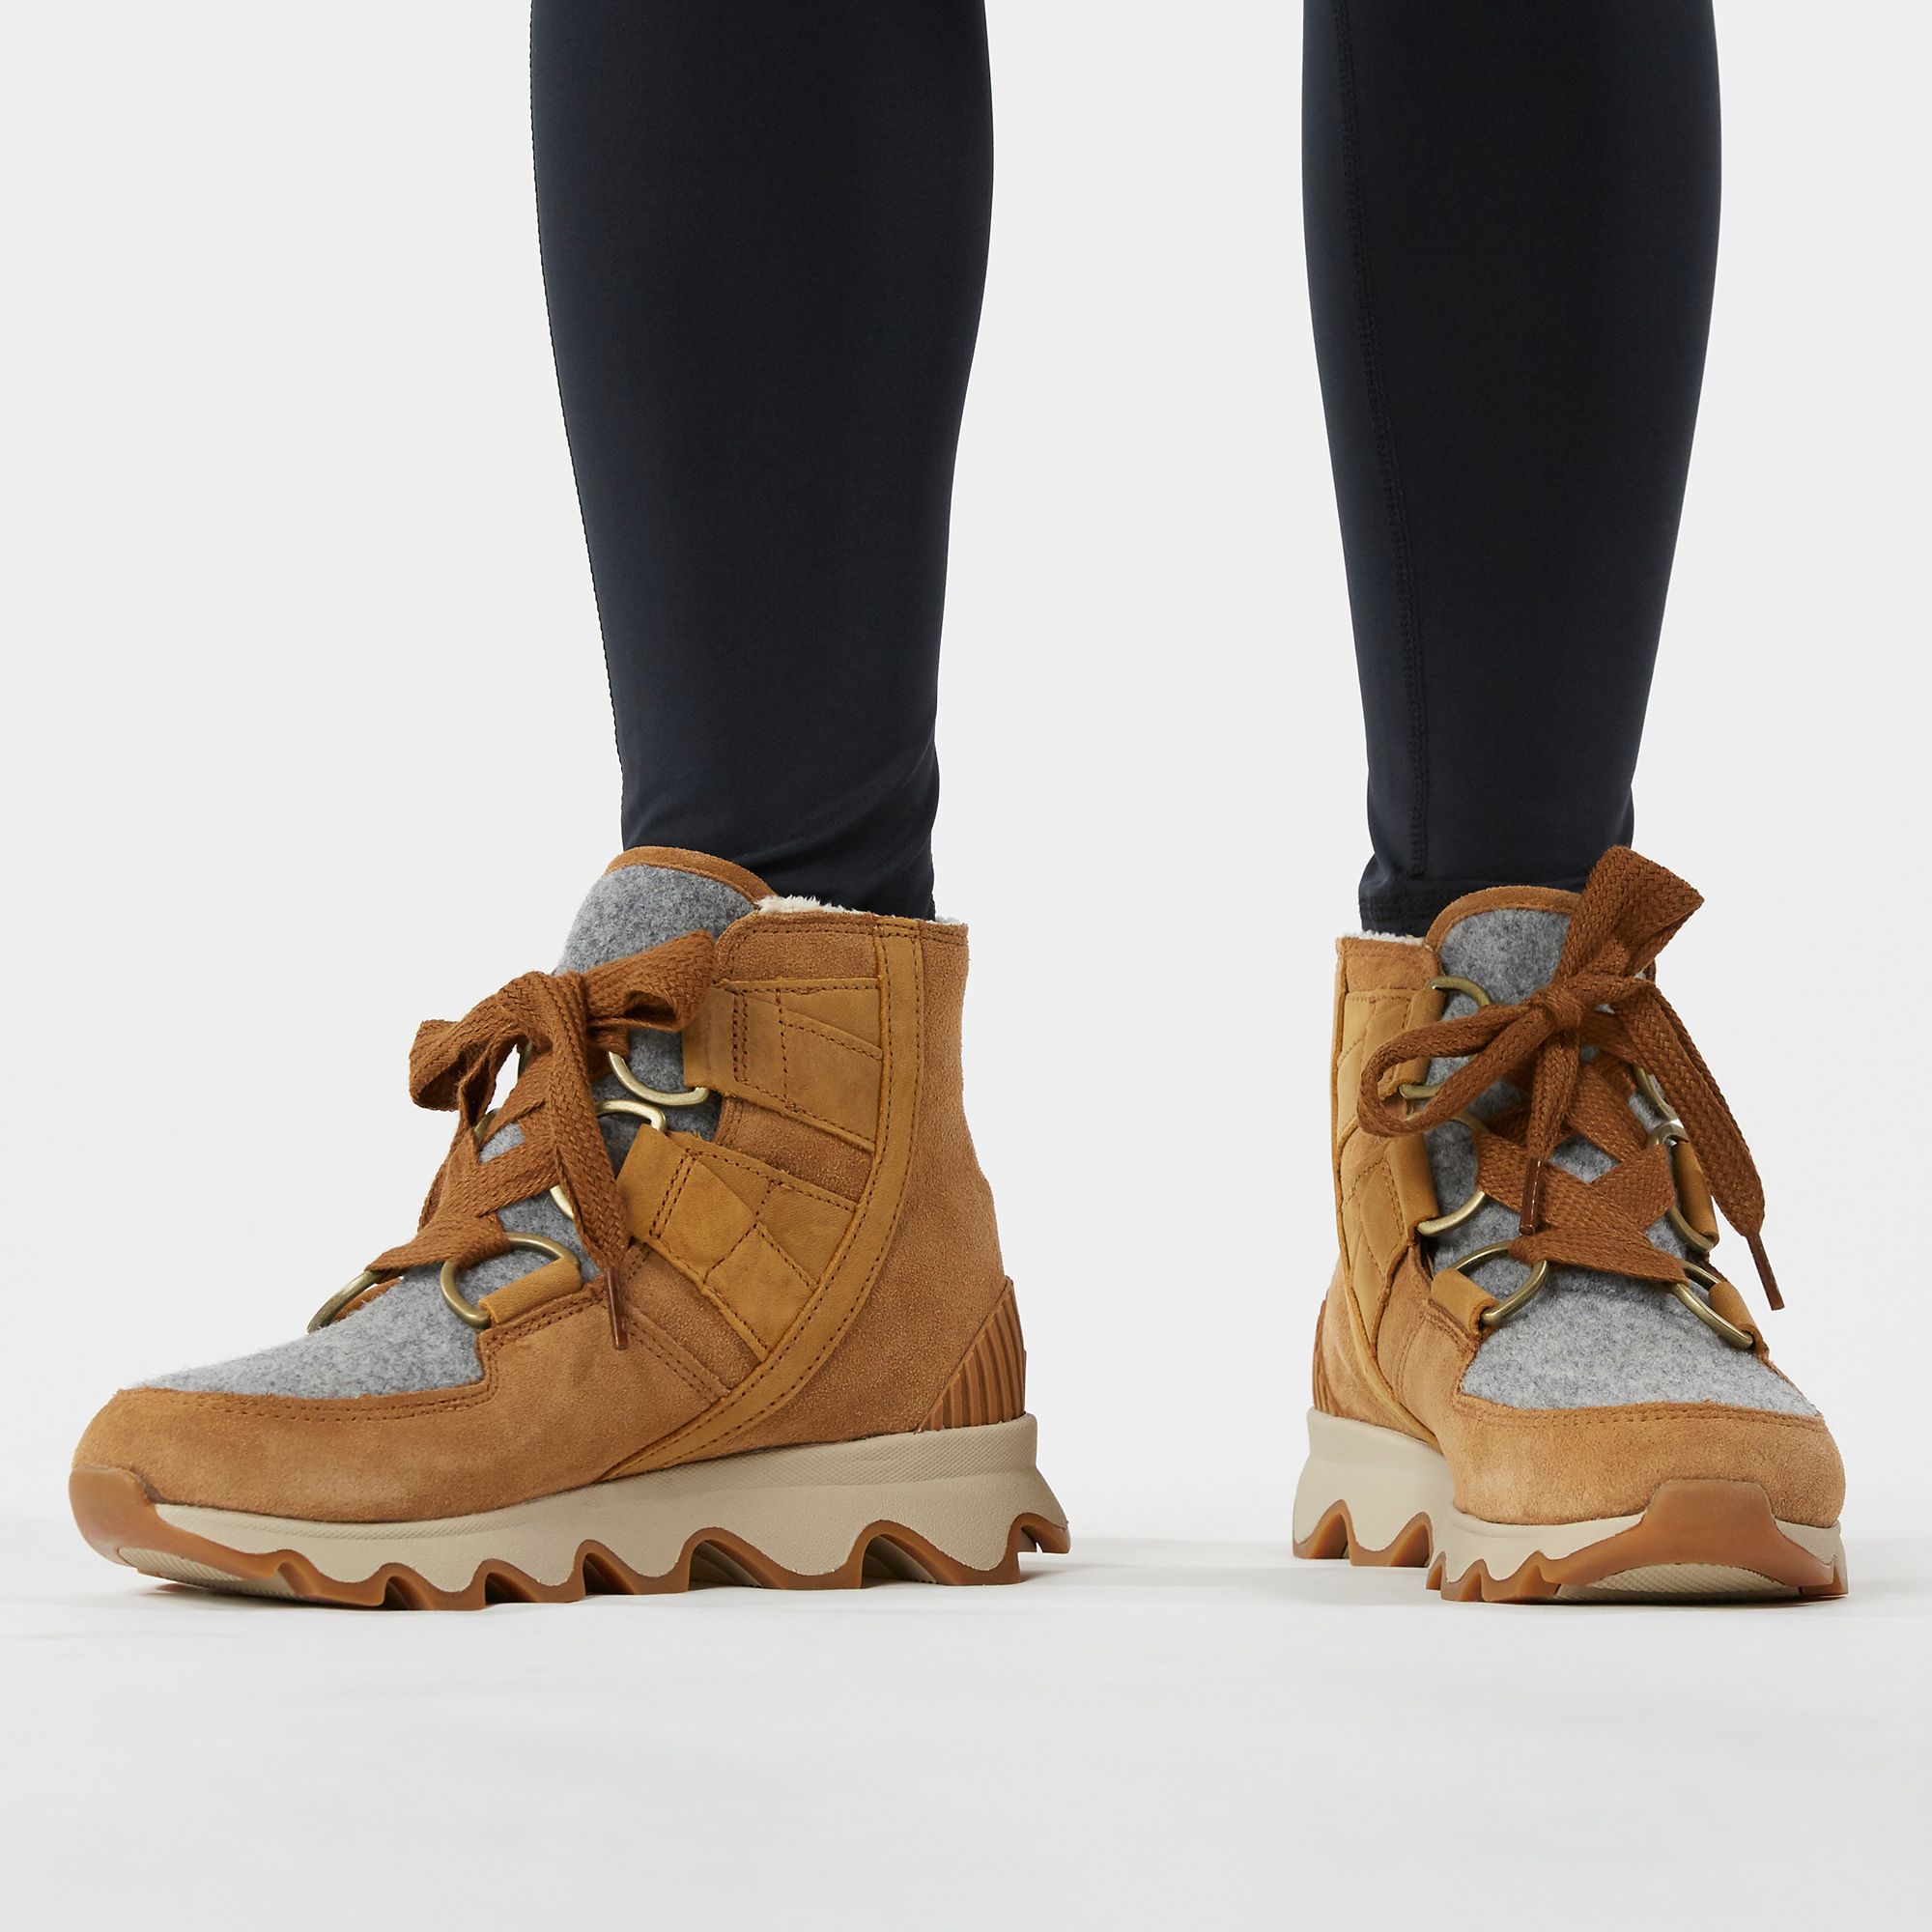 sorel women's waterproof hiking boots